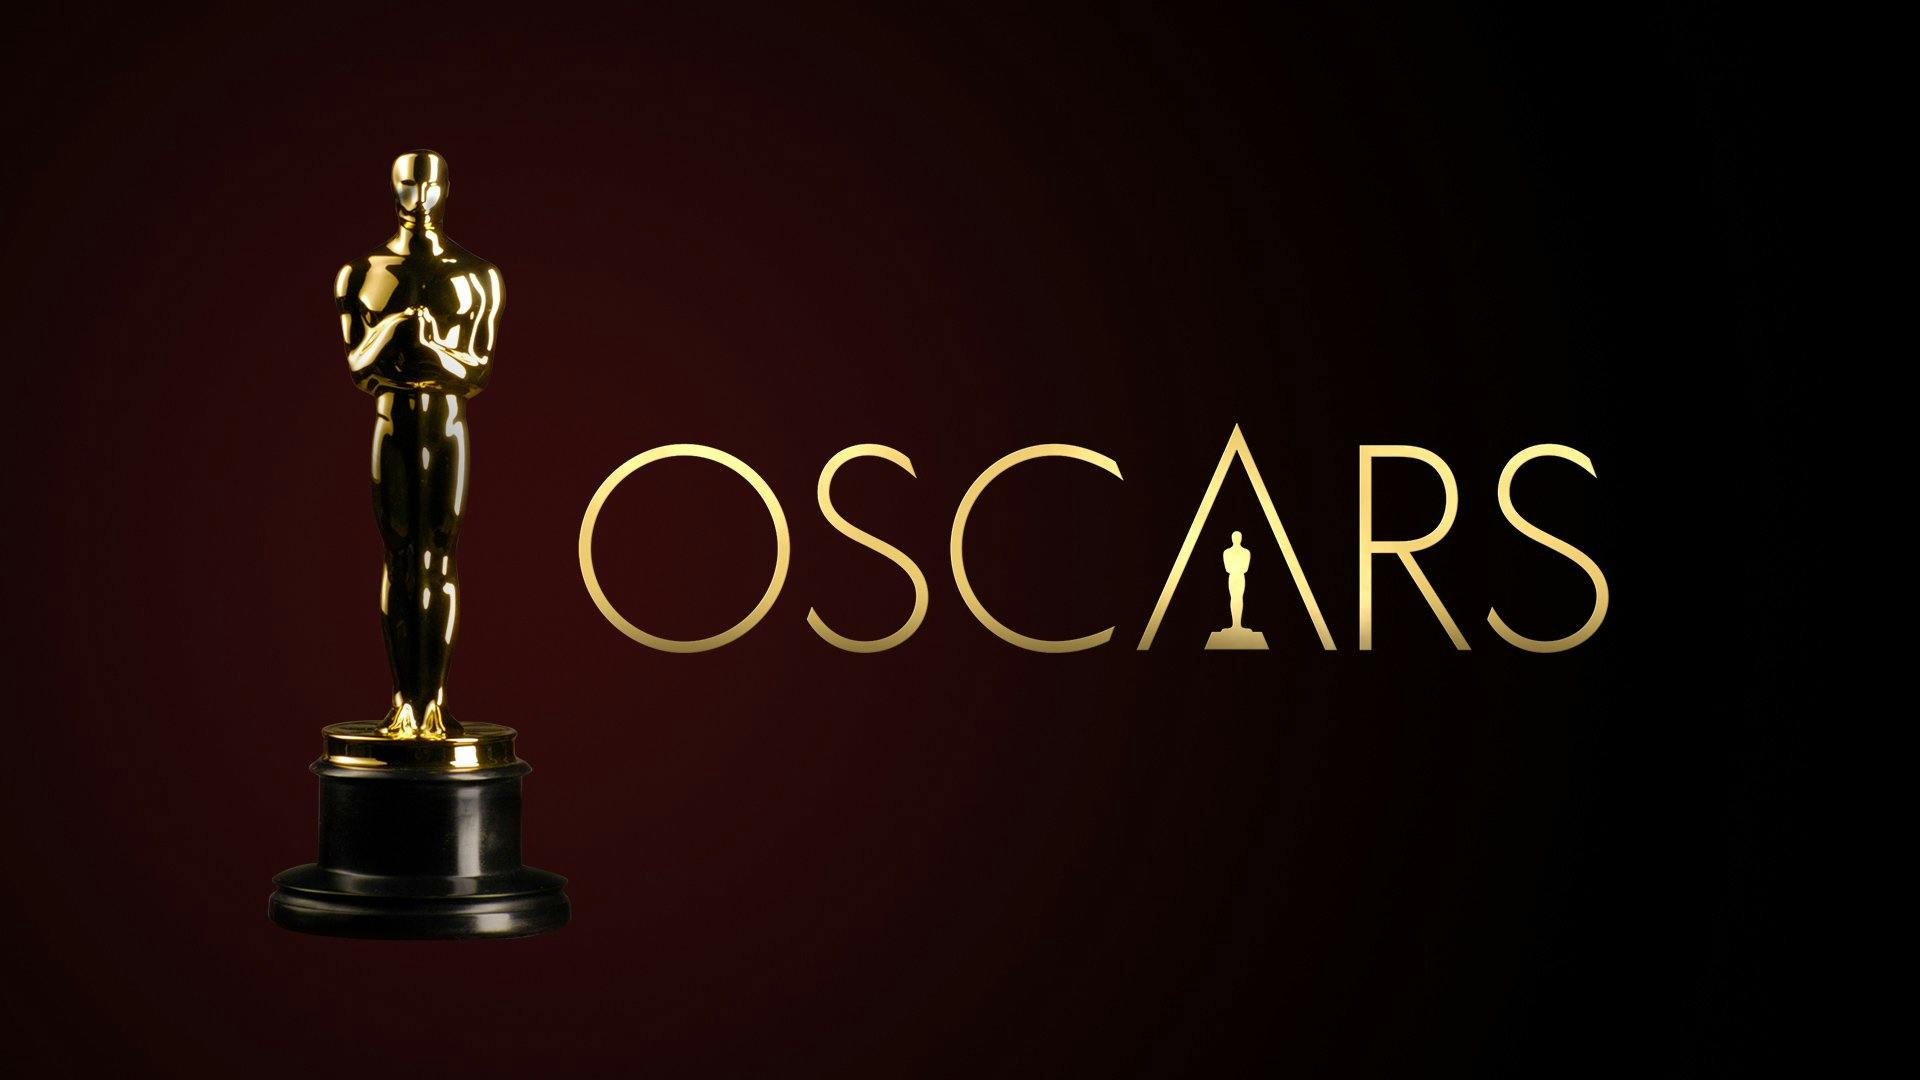 Oscars golden logo